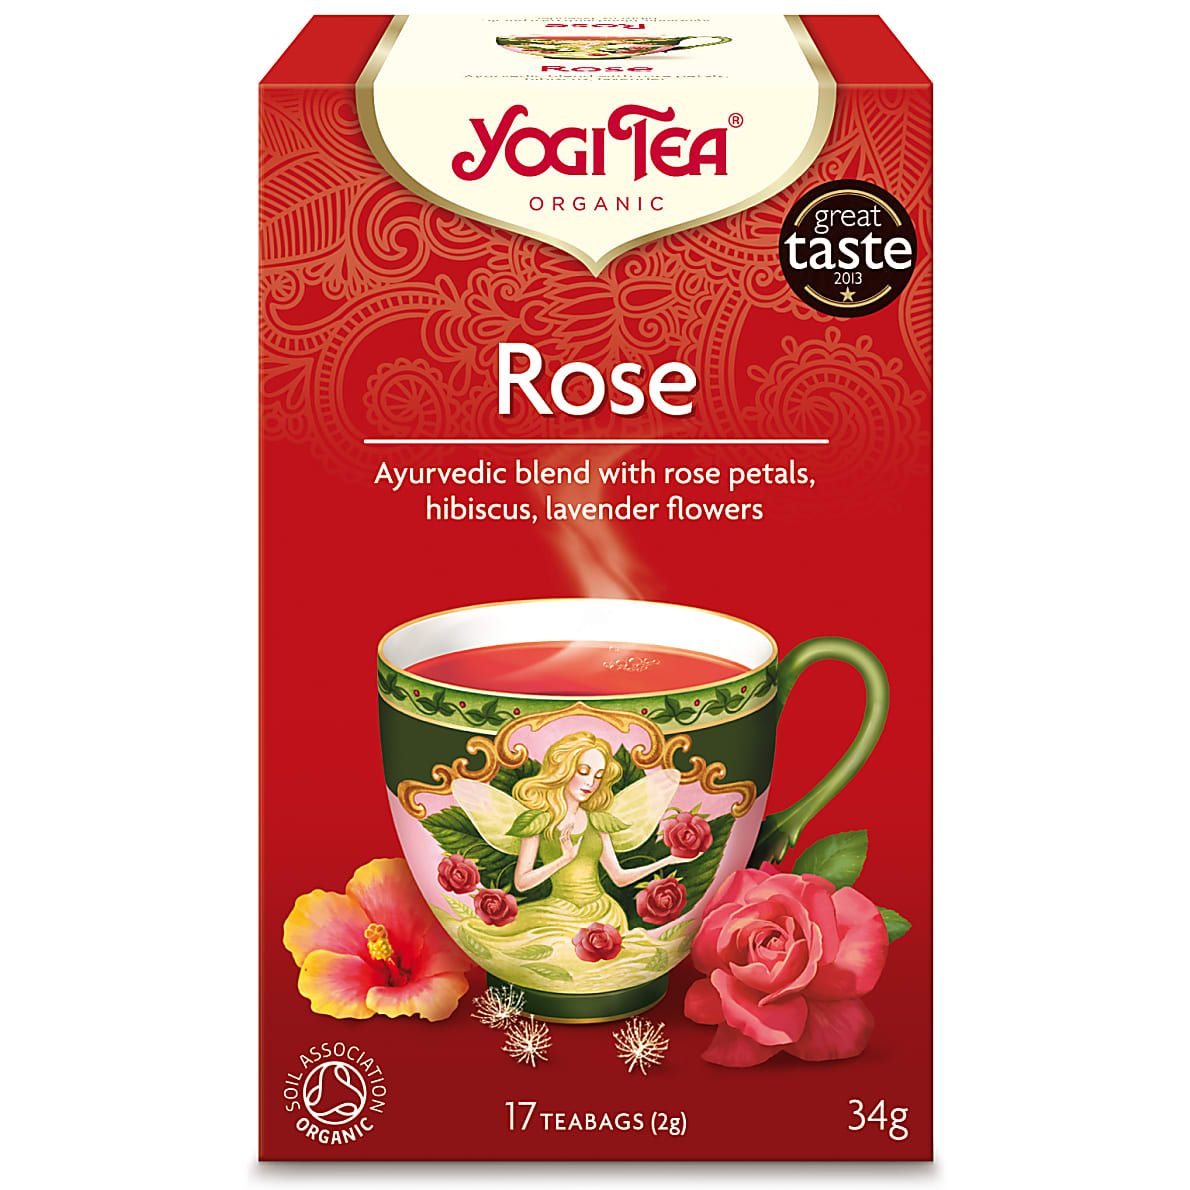 Rose pictures tea Hybrid tea